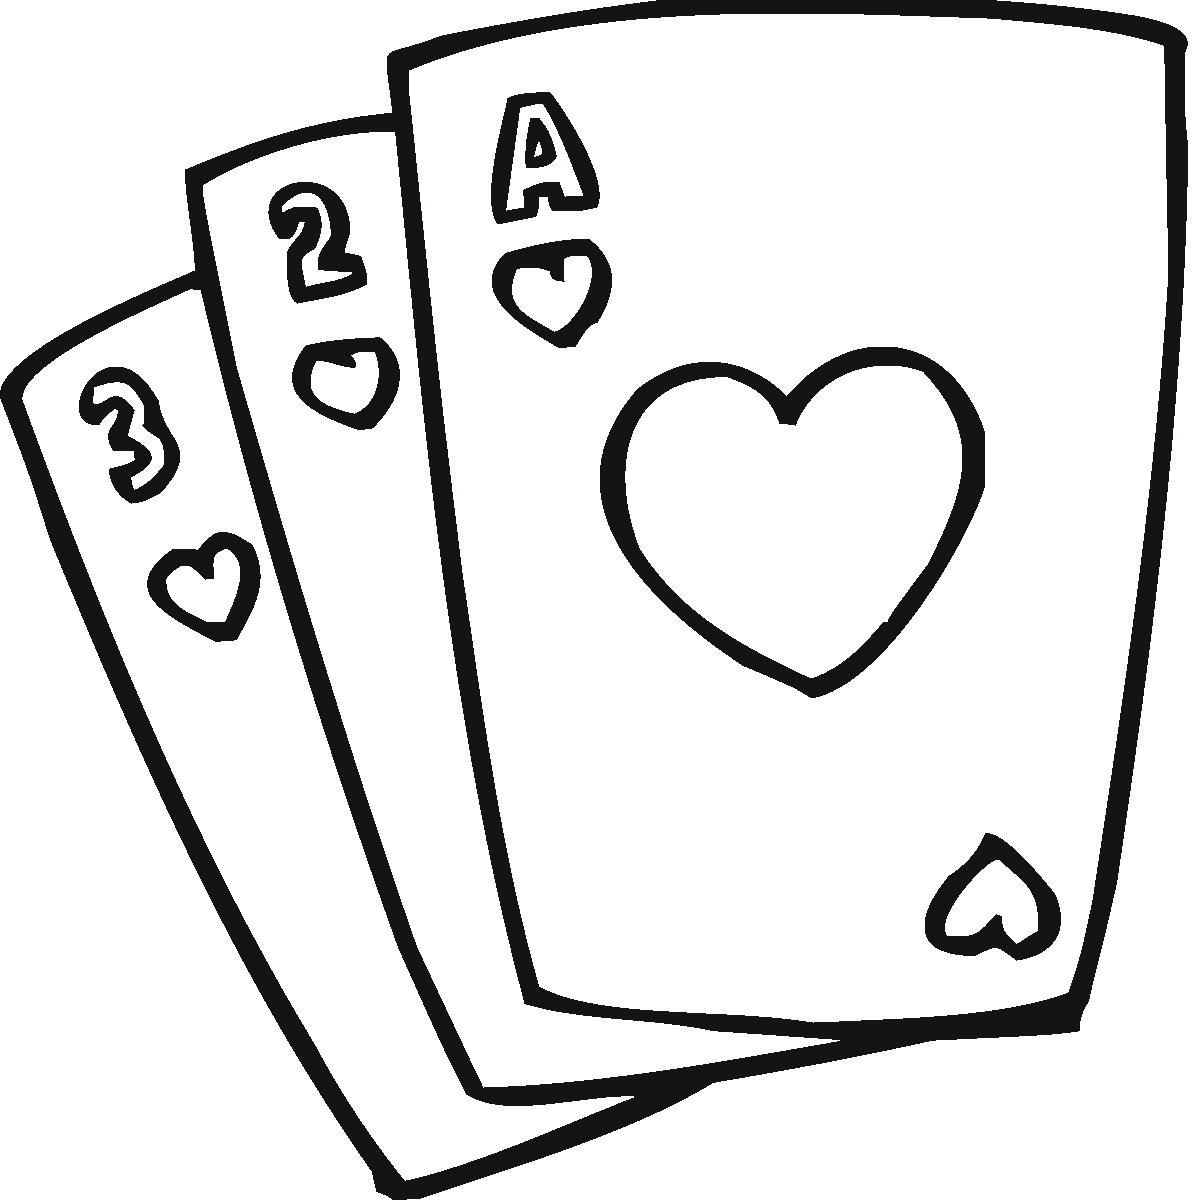 Deck Of Cards Clip Art At Clk